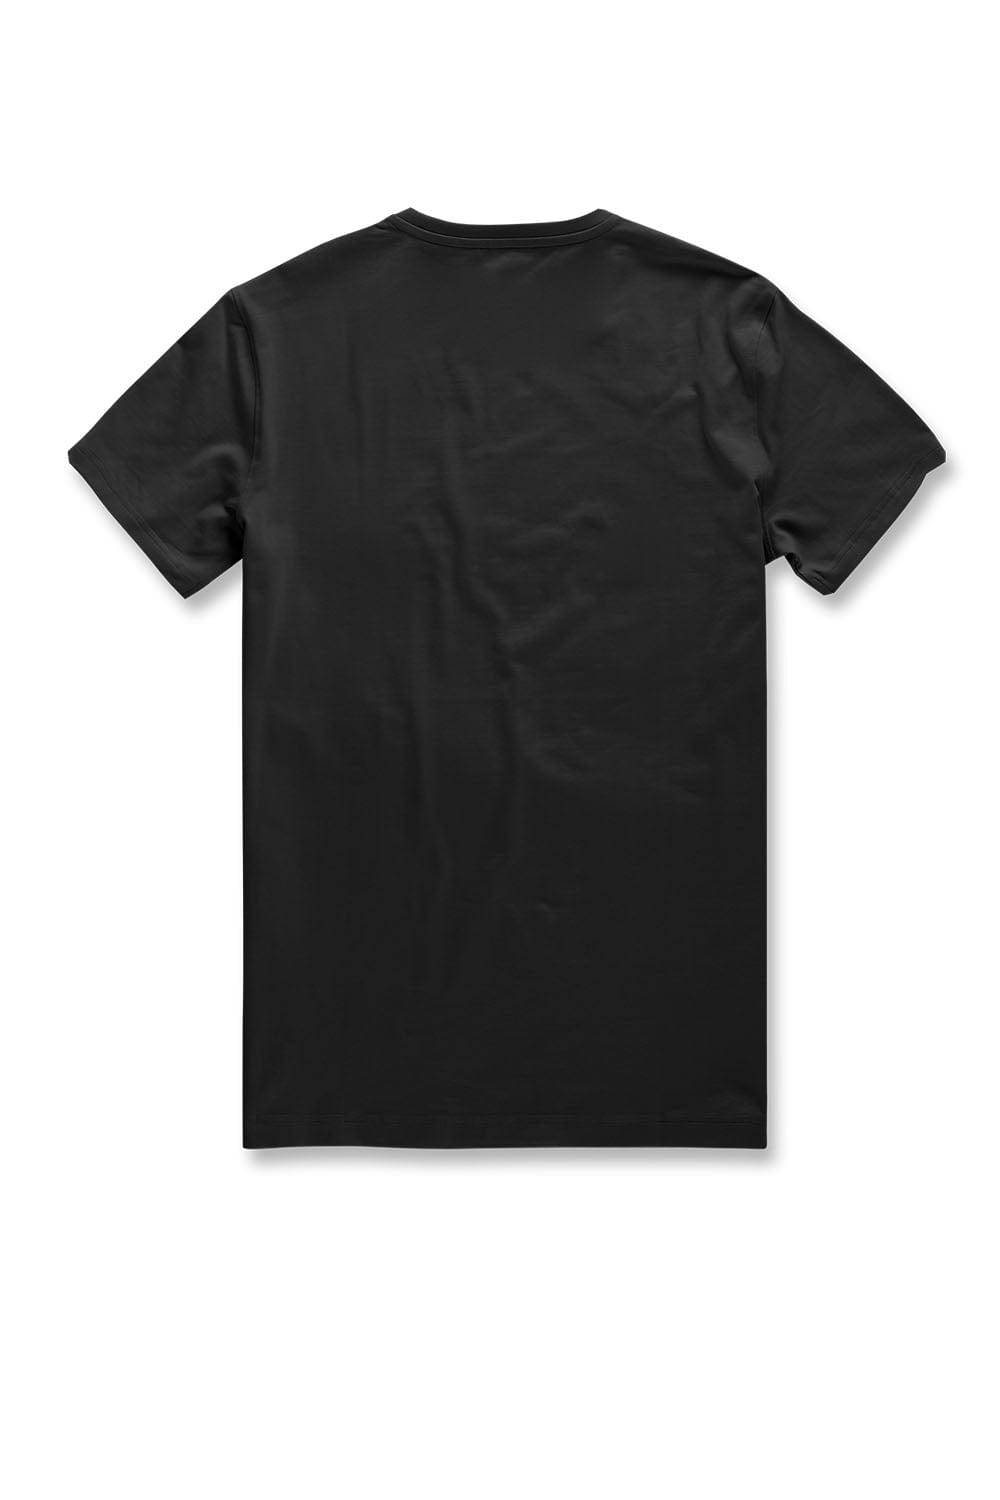 JC Big Men Big Men's Time's Up T-Shirt (Black)